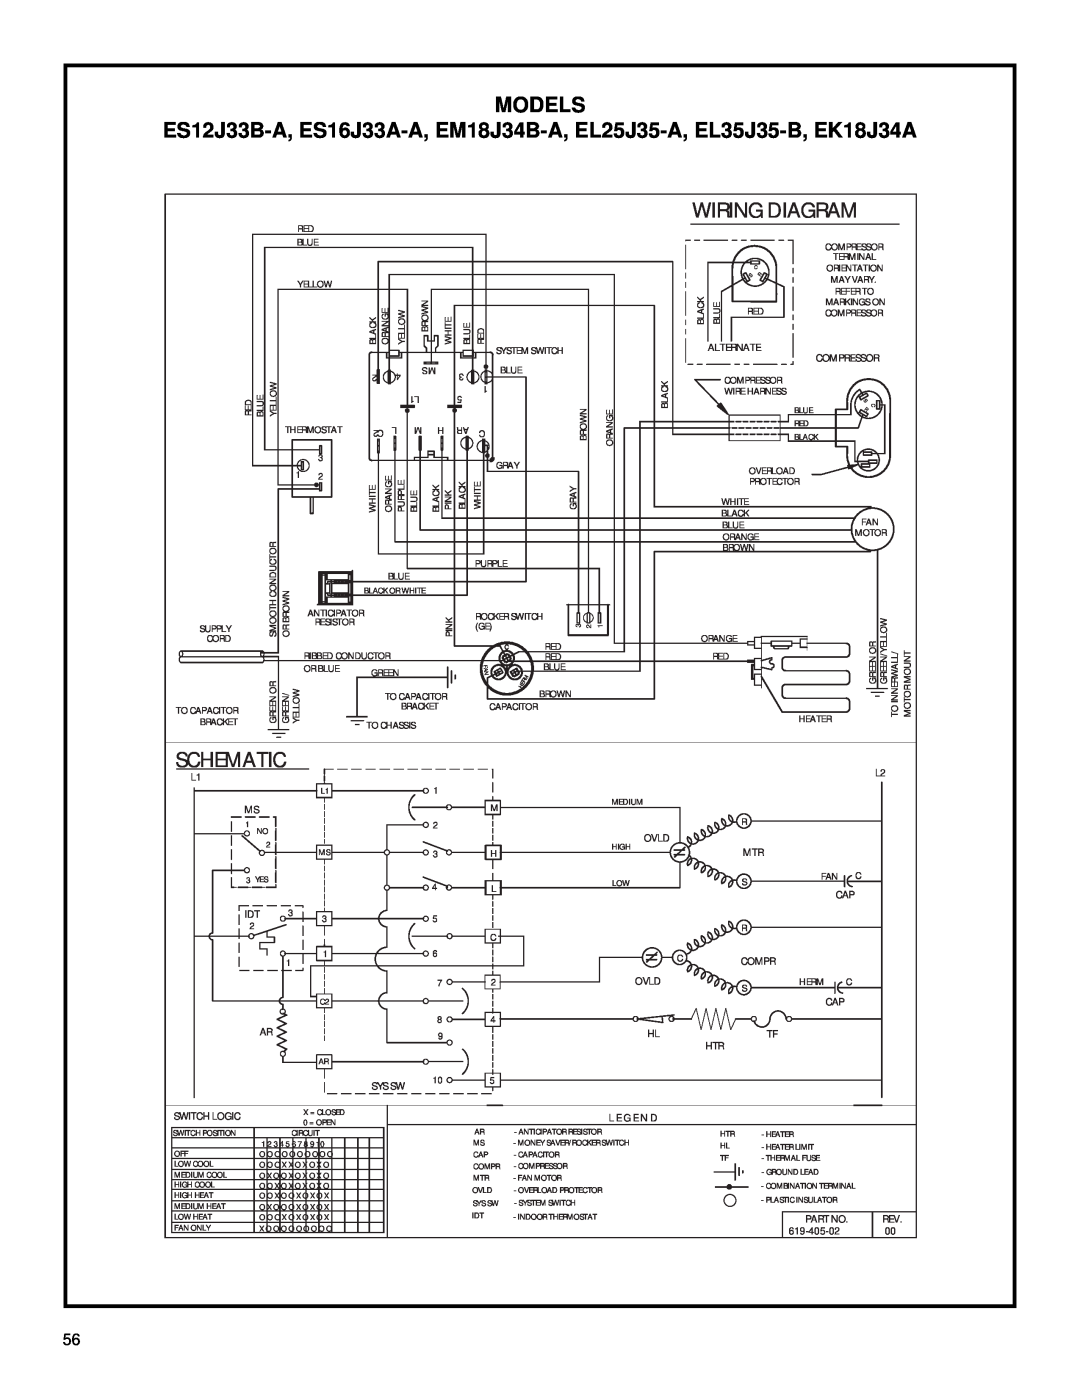 Friedrich racservmn service manual Wiring Diagram, Schematic, Models 